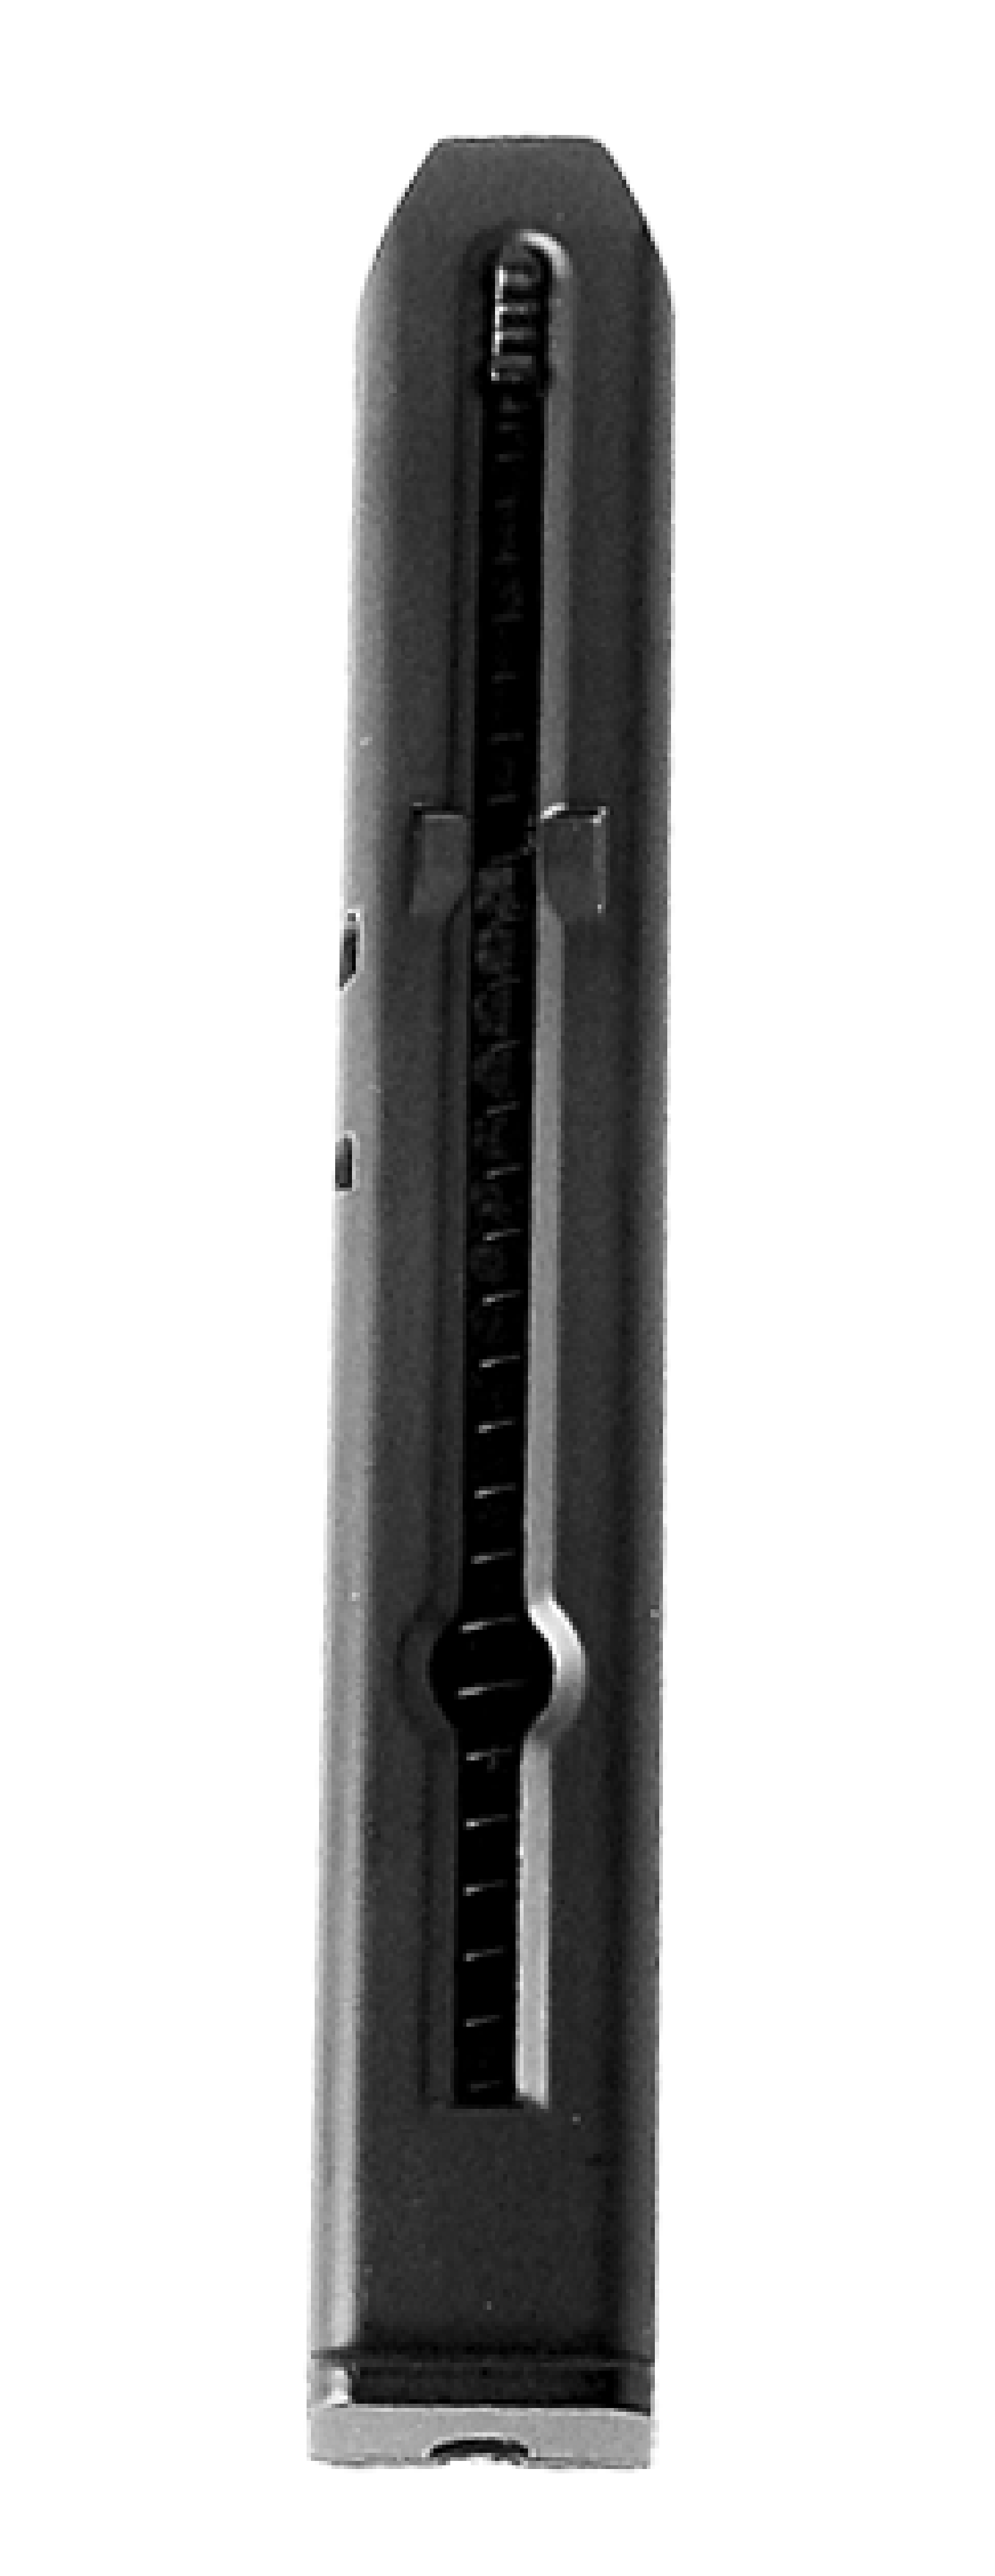 Se Cybergun Colt 1911 Match CO2 Magasin hos Handelshuset Aulum